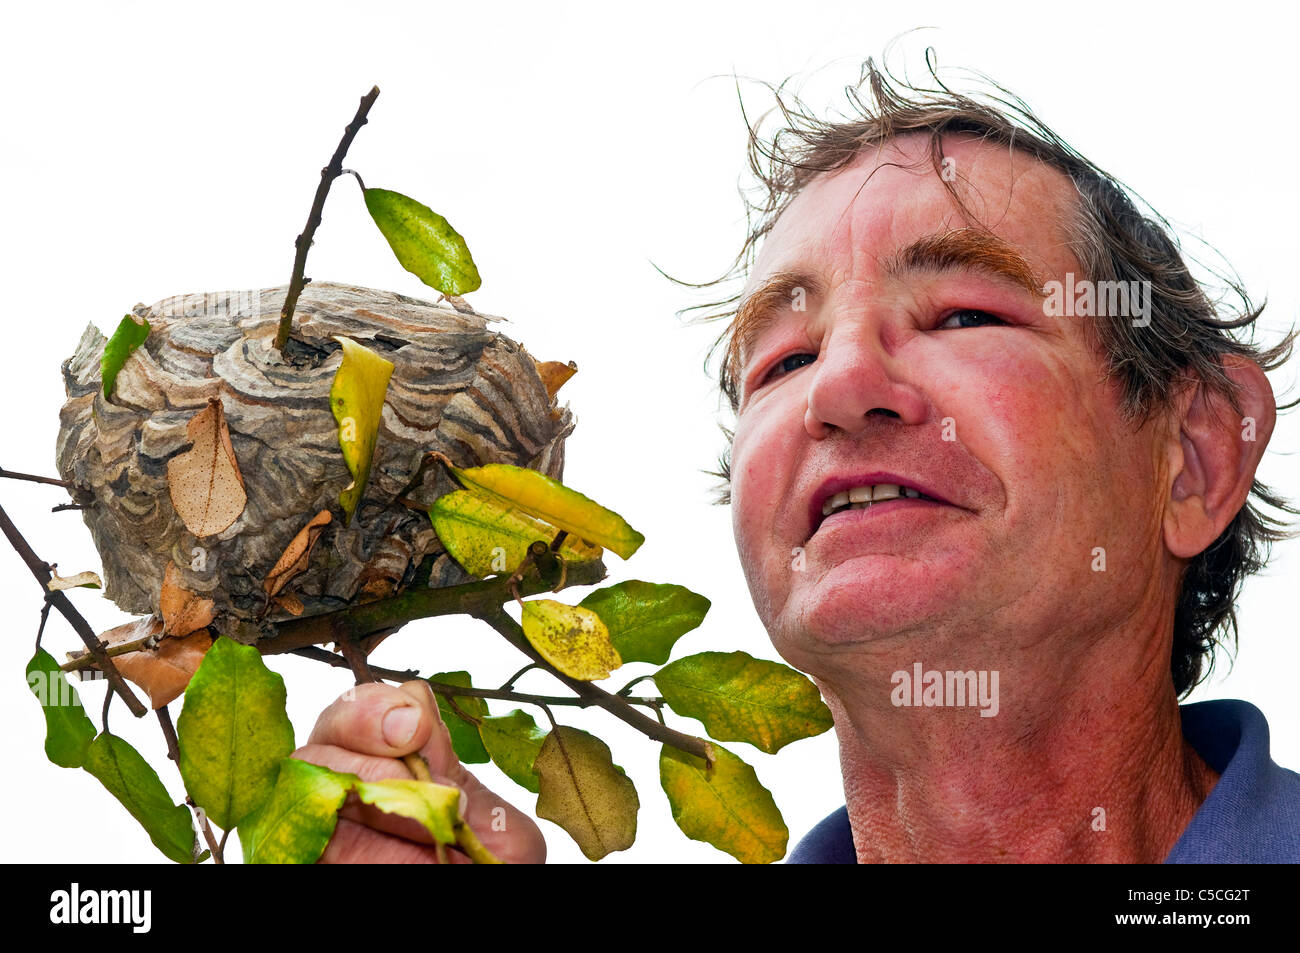 Homme avec piqûres de guêpe / gonflement du visage holding wasp's Nest - France. Banque D'Images